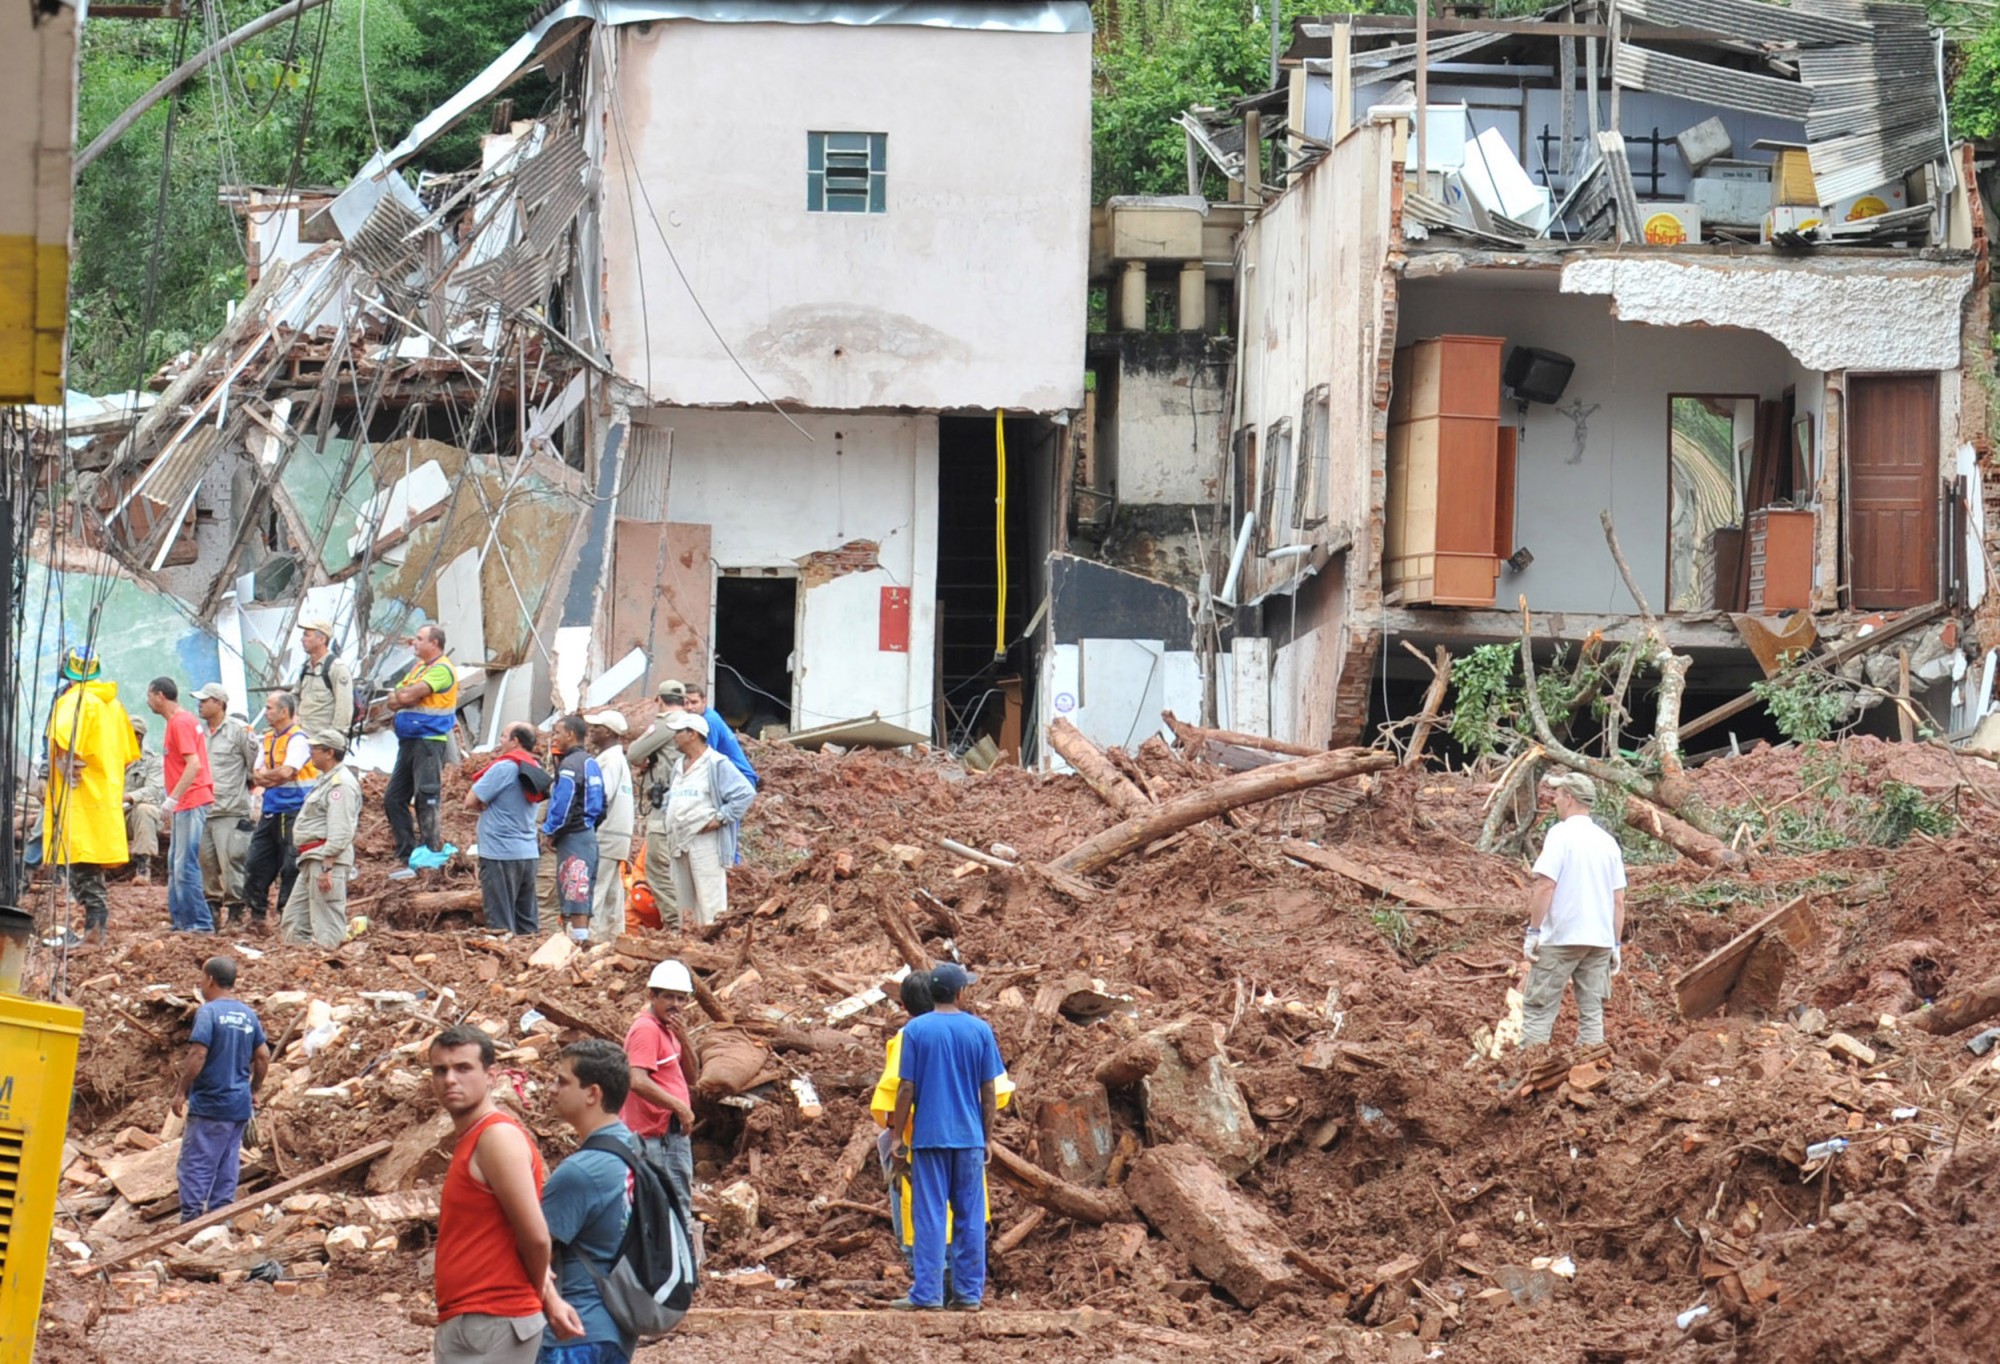 Mudslide Emergency Drills Begin in Rio’s Favela Communities